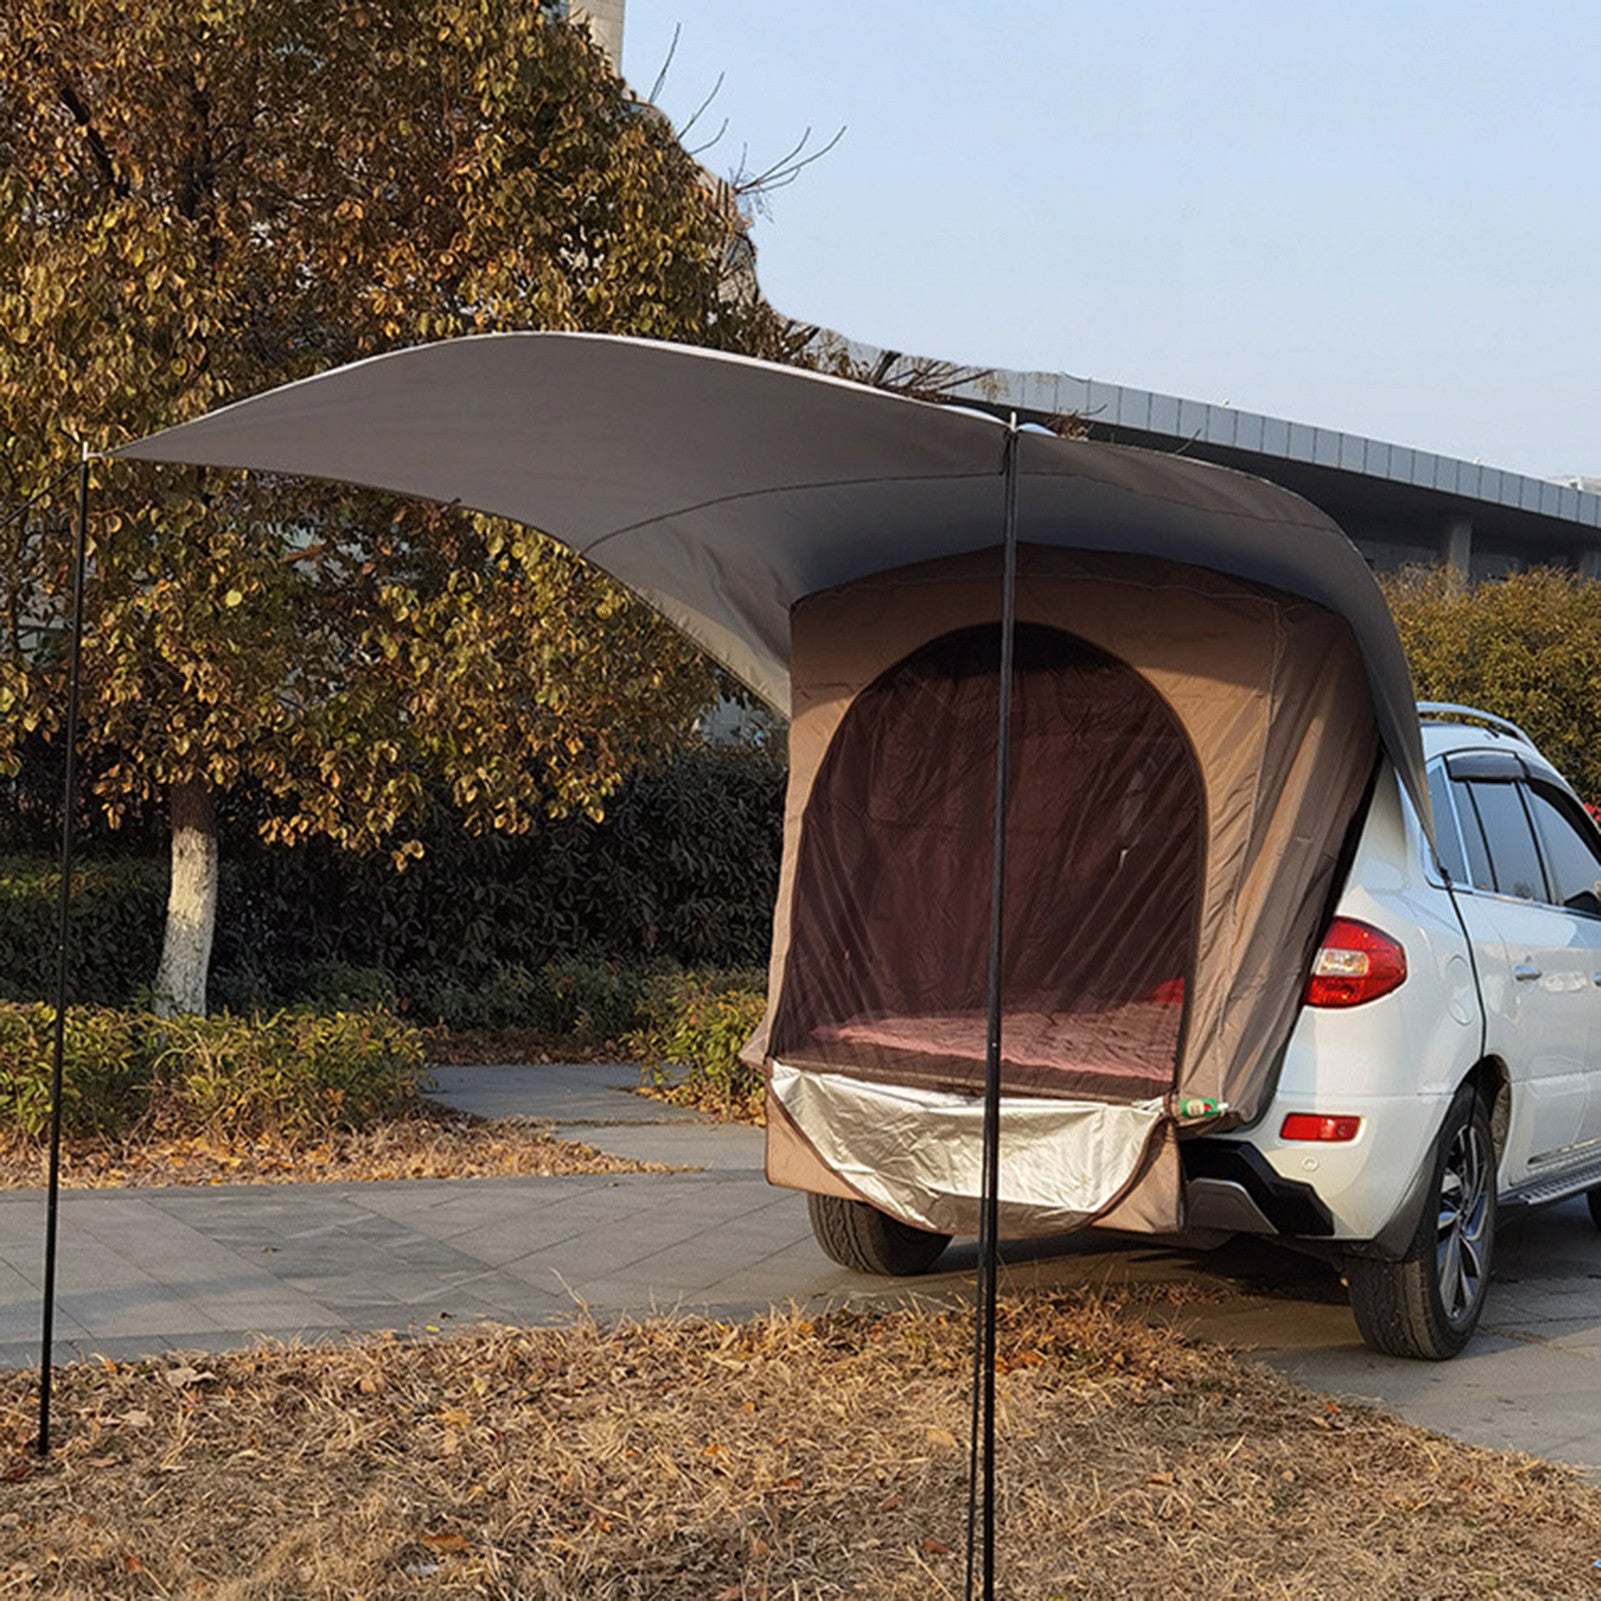 Car Tail Car Side Trunk Canopy Camping Camping Tent-Seasonal & Holiday Decorations-LifeGetsEasy